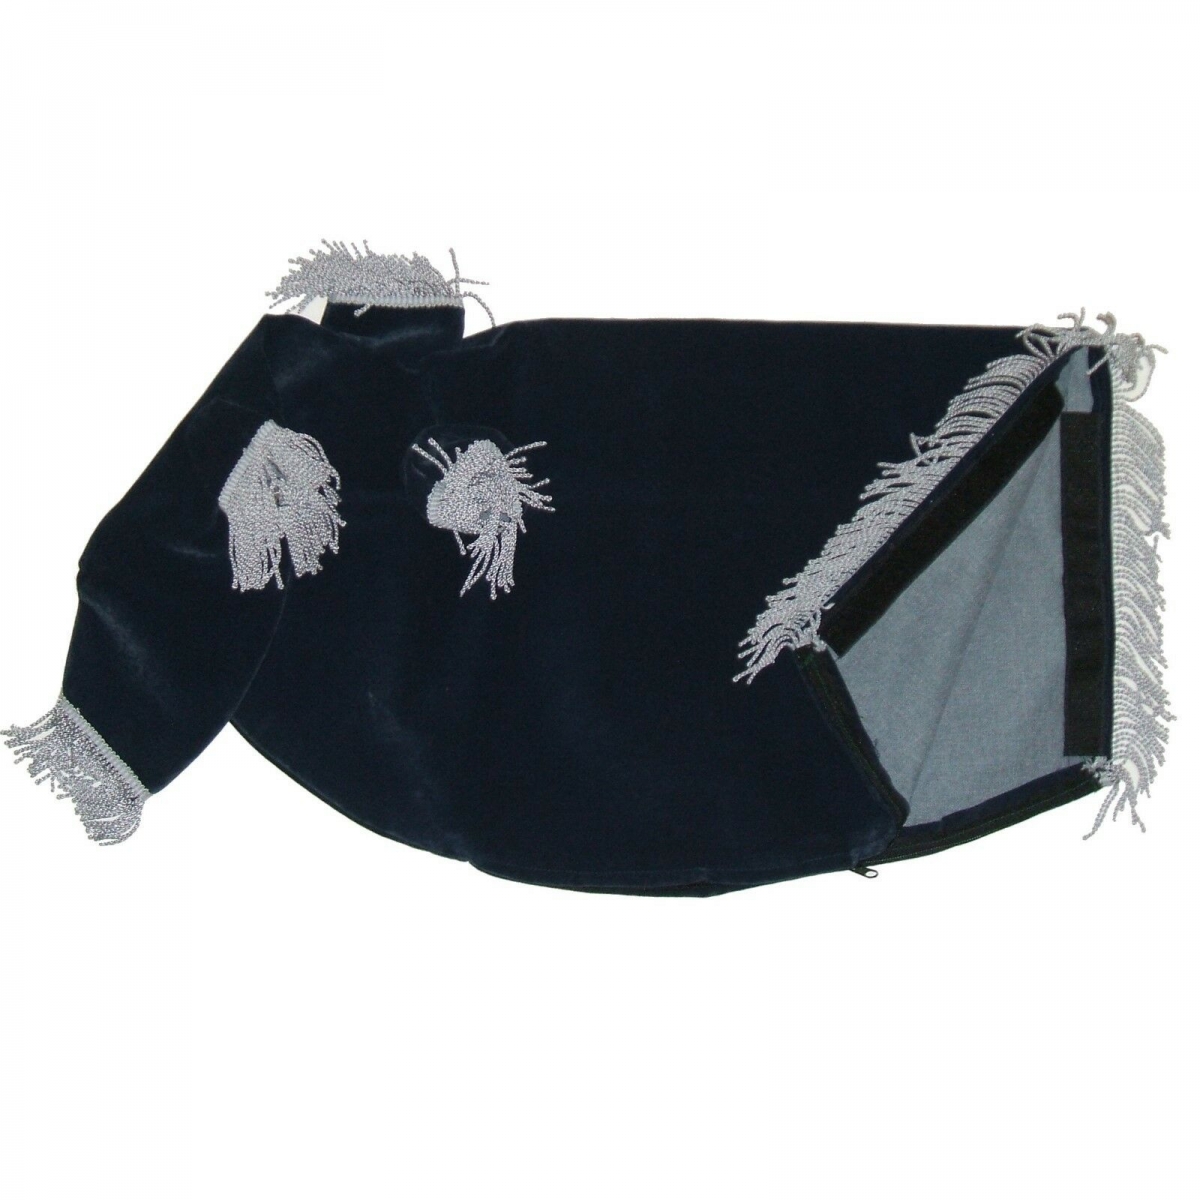 Pipe Bag Cover made of Velvet Navy with Silver Fringe